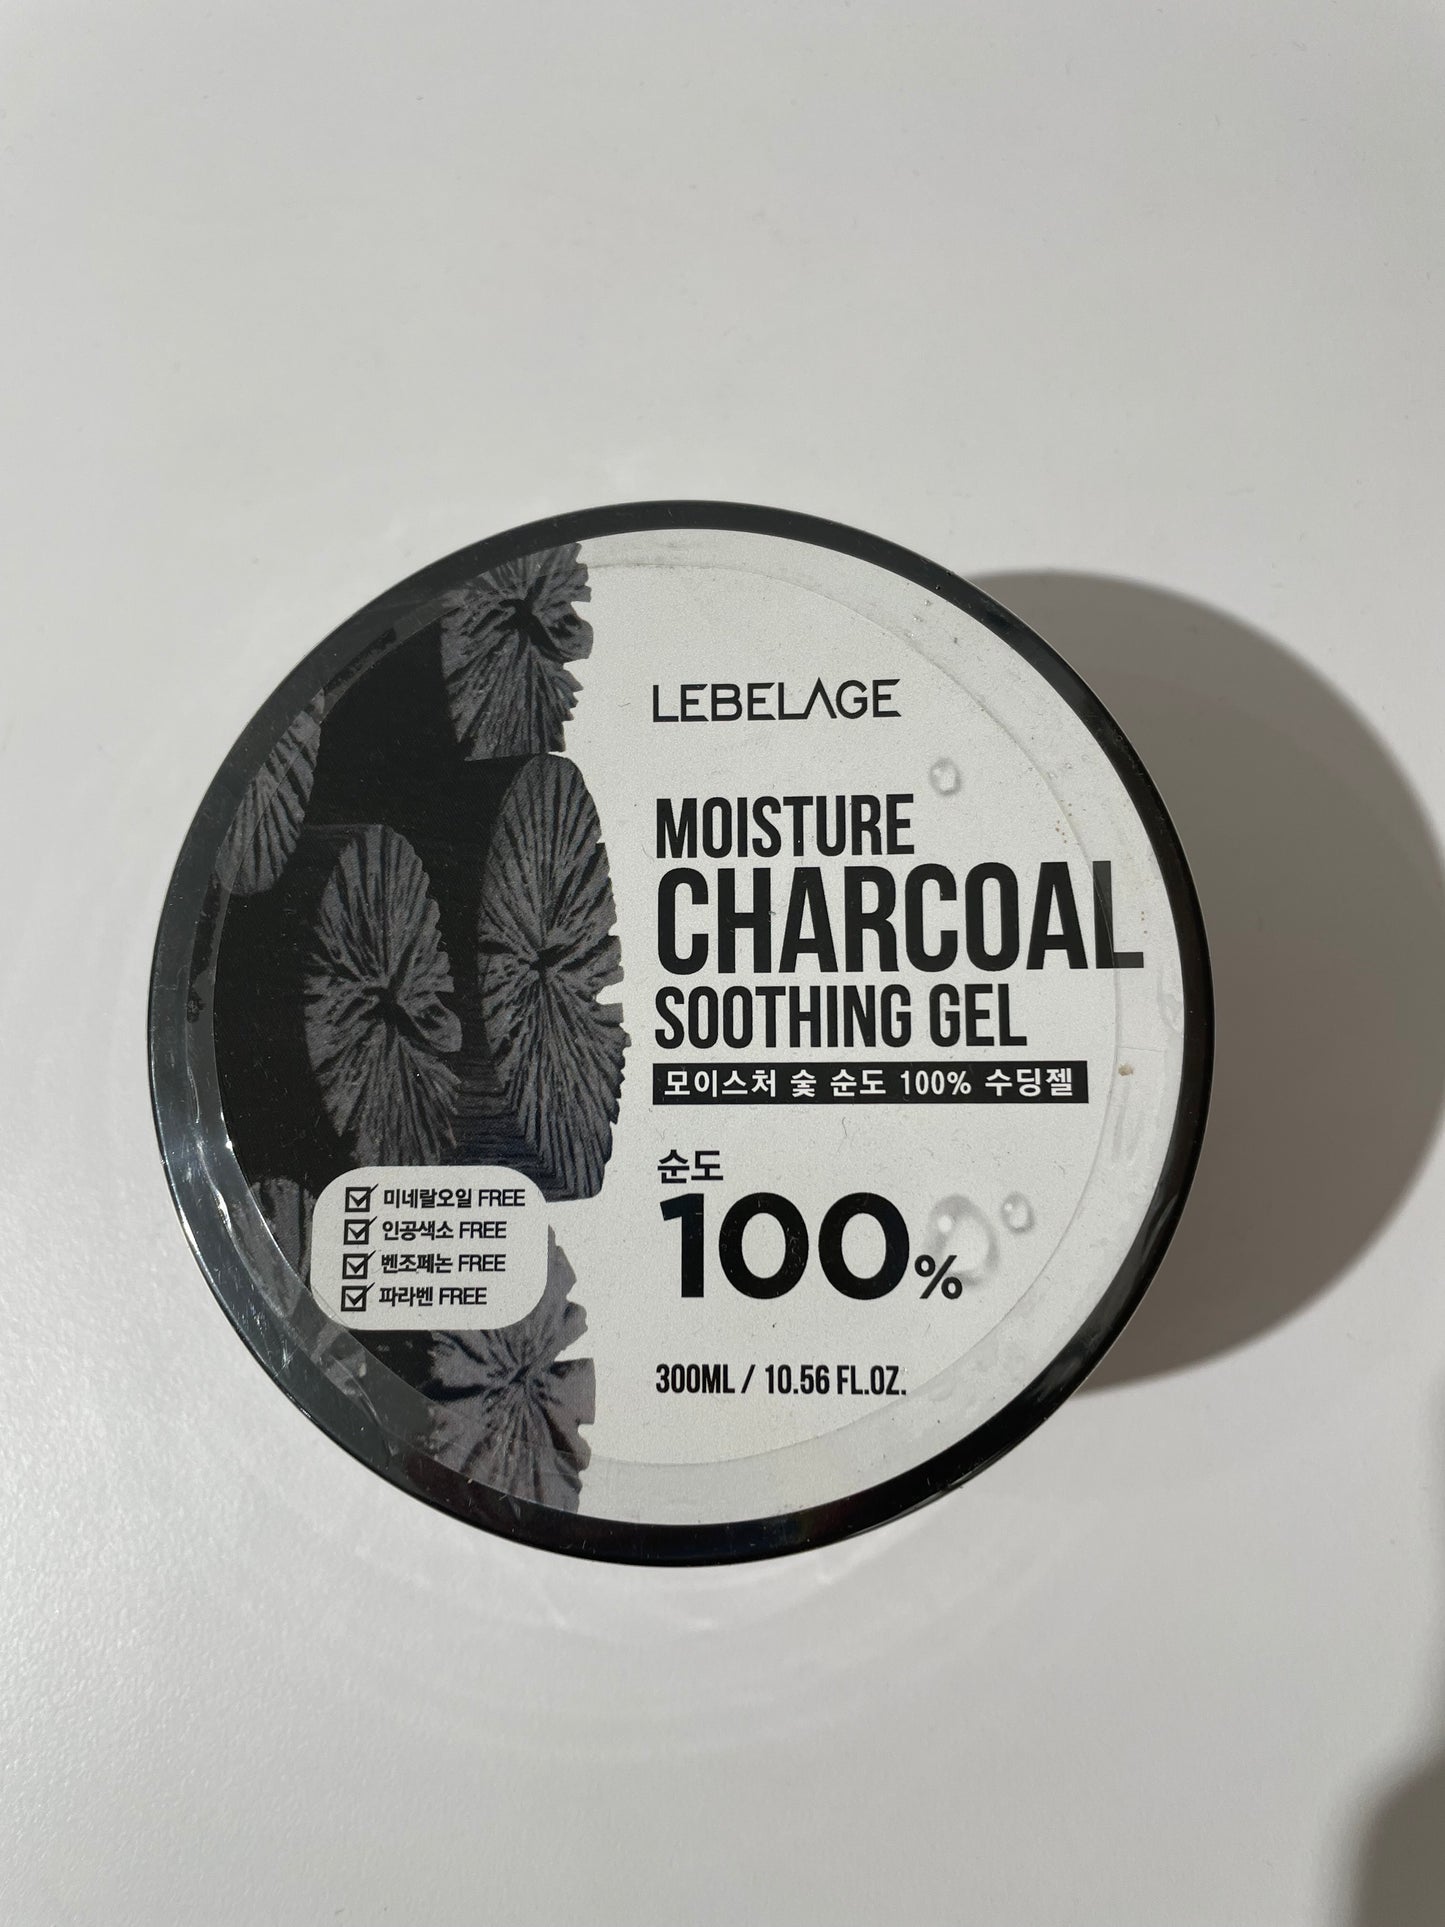 LBLG Moisture Charcoal 100% Soothing Gel 300ml